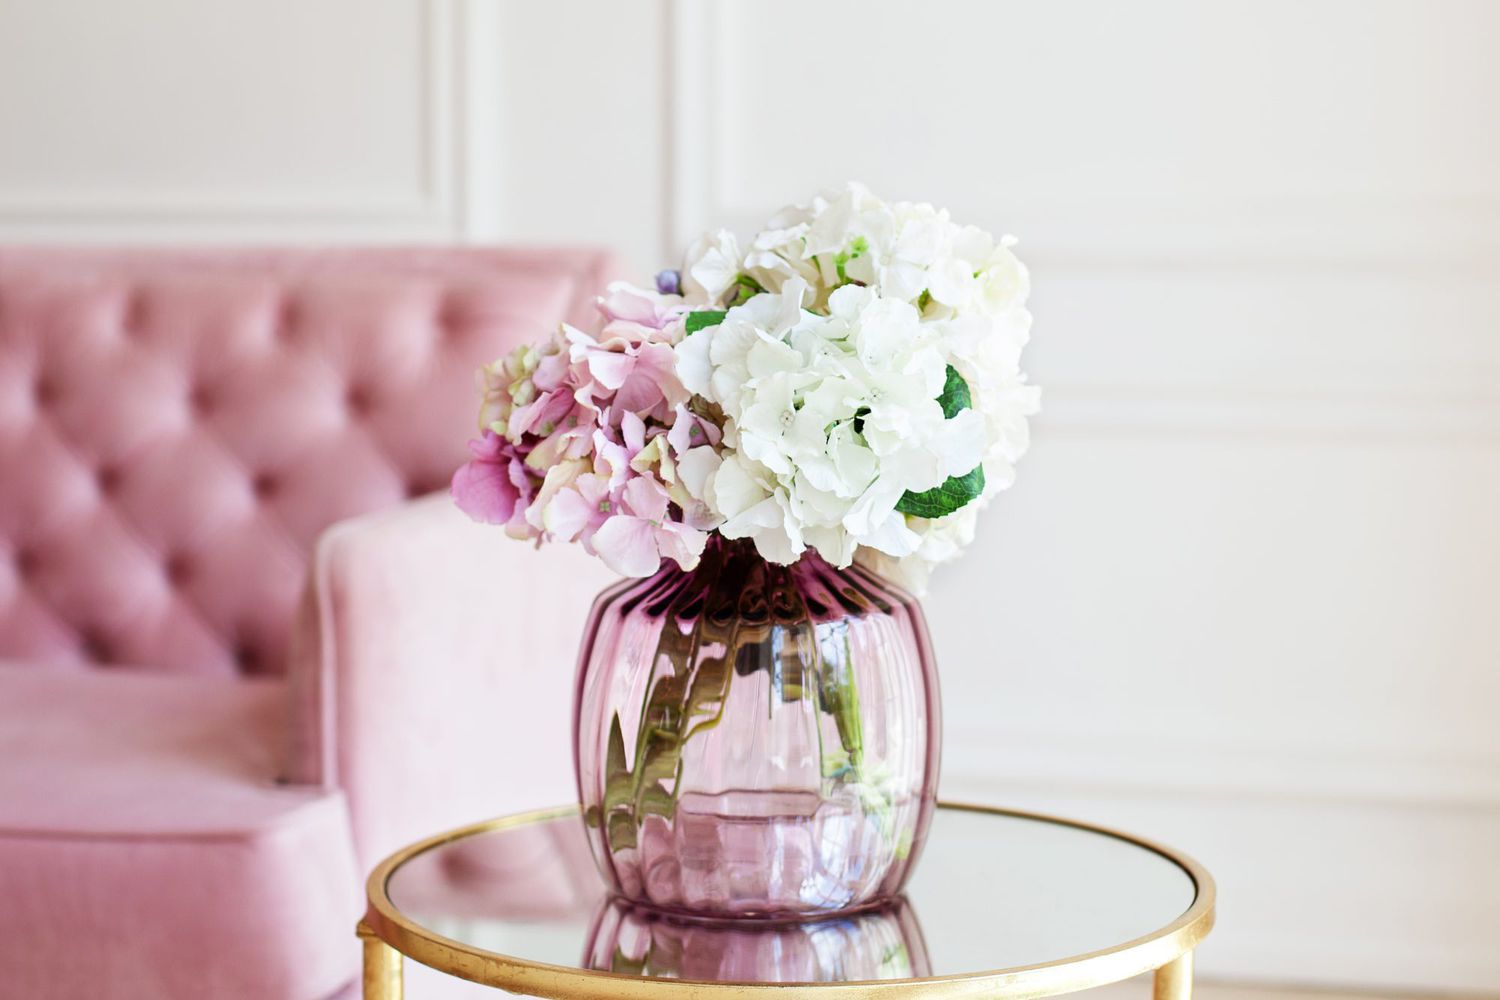 hydrangea bouquet arrangement in pink vase